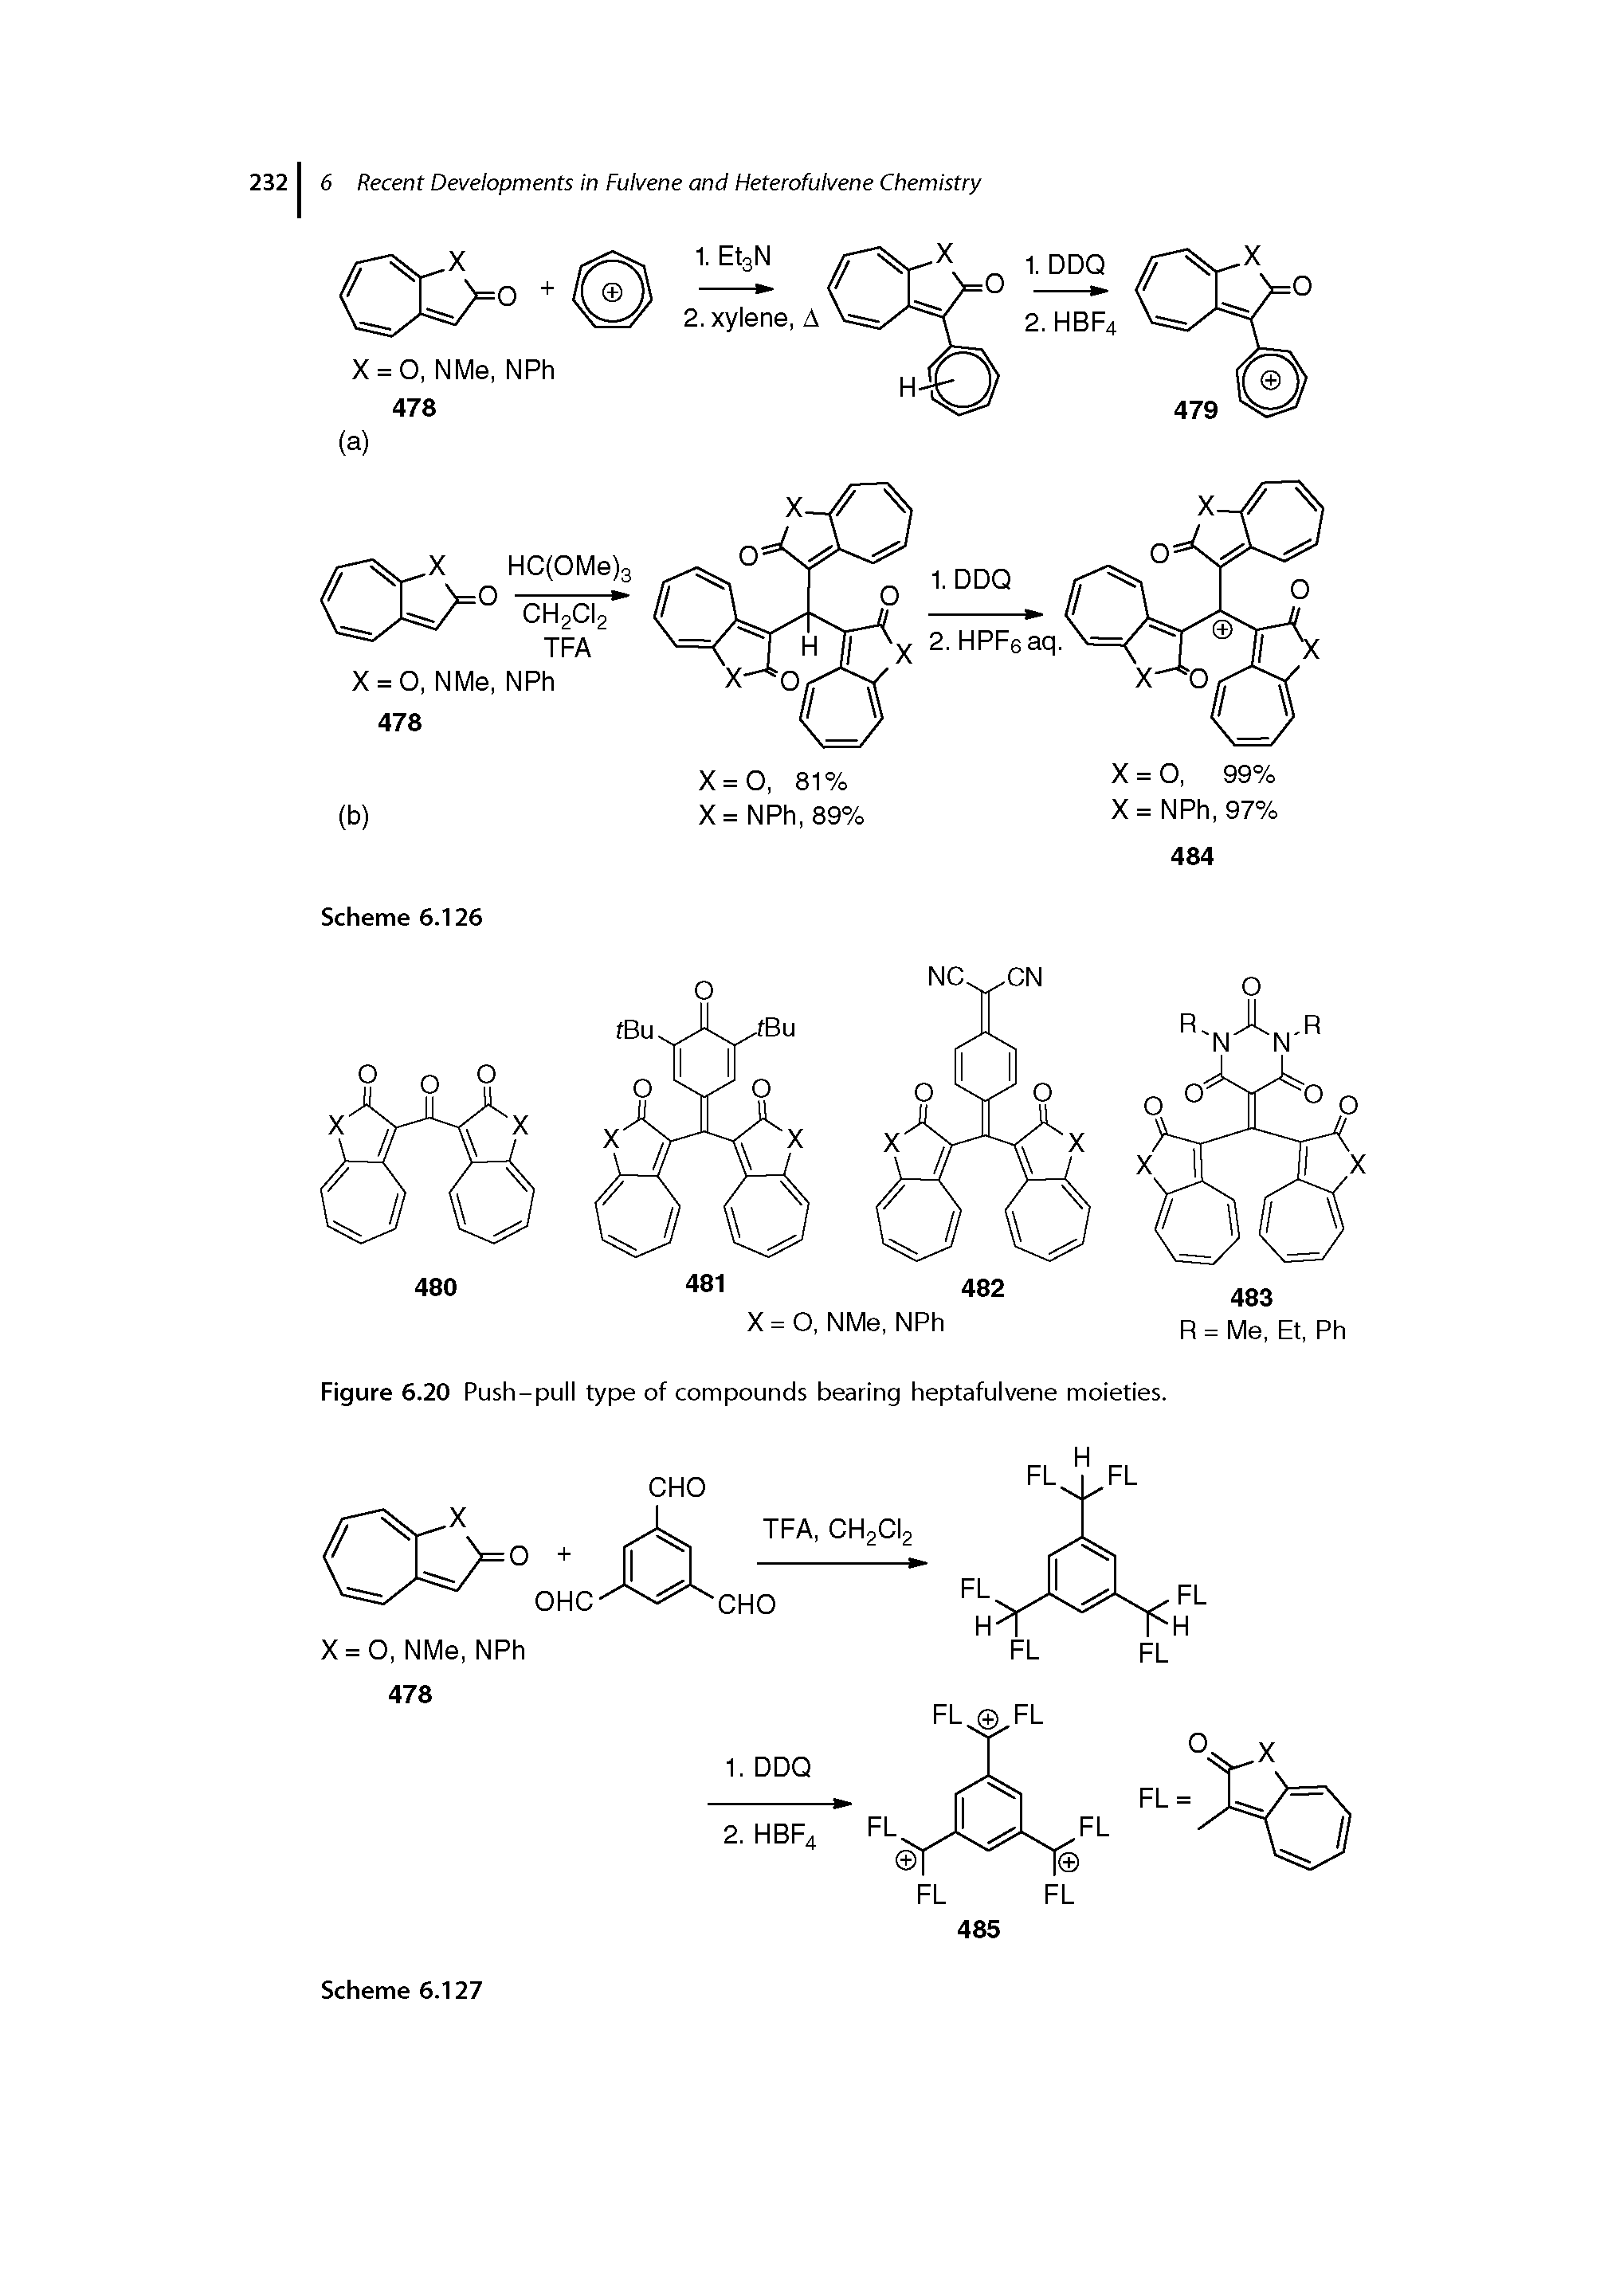 Figure 6.20 Push-pull type of compounds bearing heptafulvene moieties.